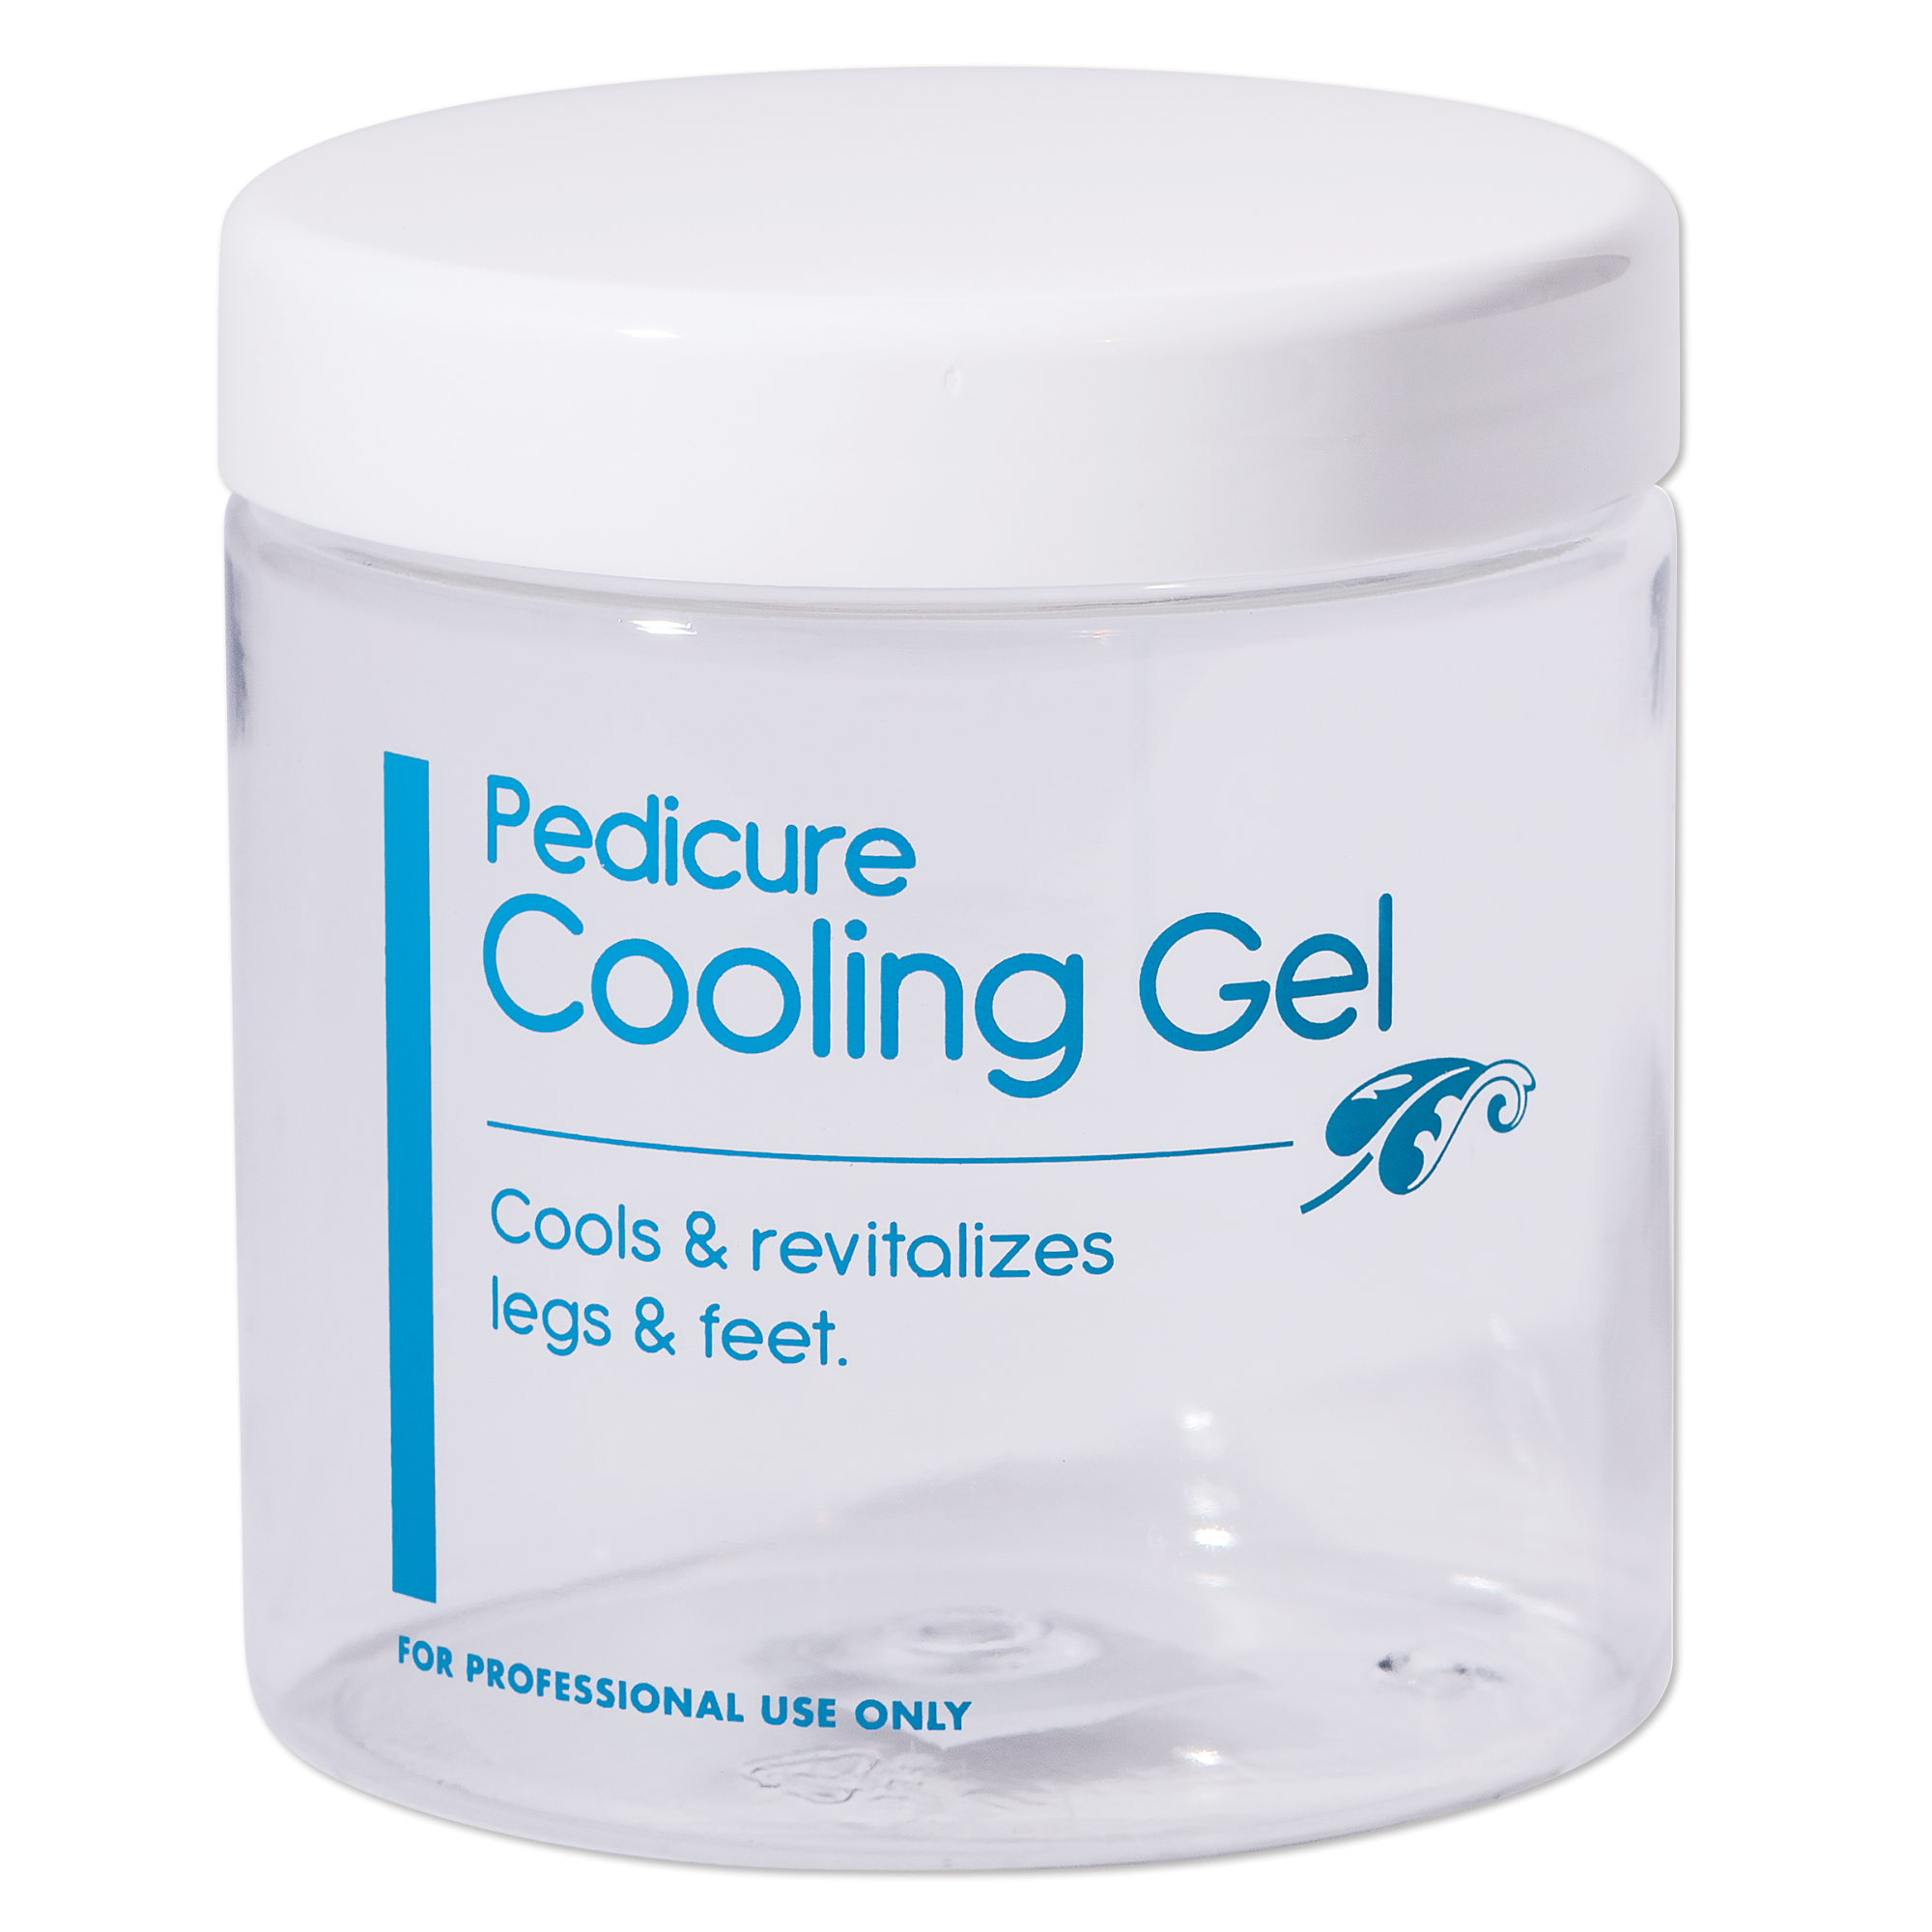 Imprinted Pedicure Cooling Gel Jar, 16 oz.